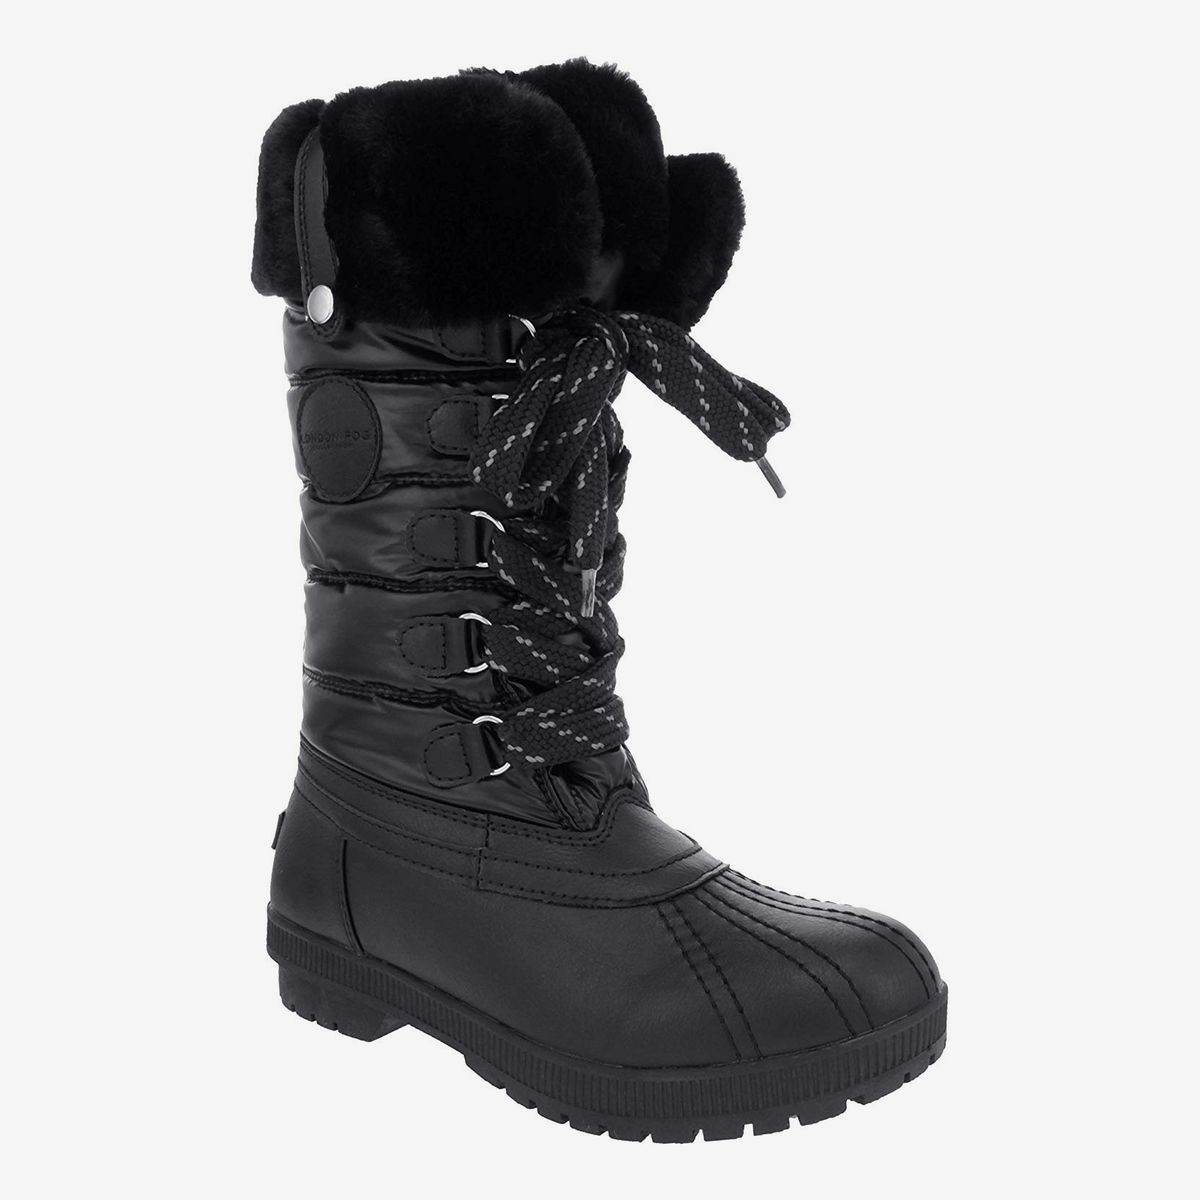 13 Best Winter Boots for Women 2020 